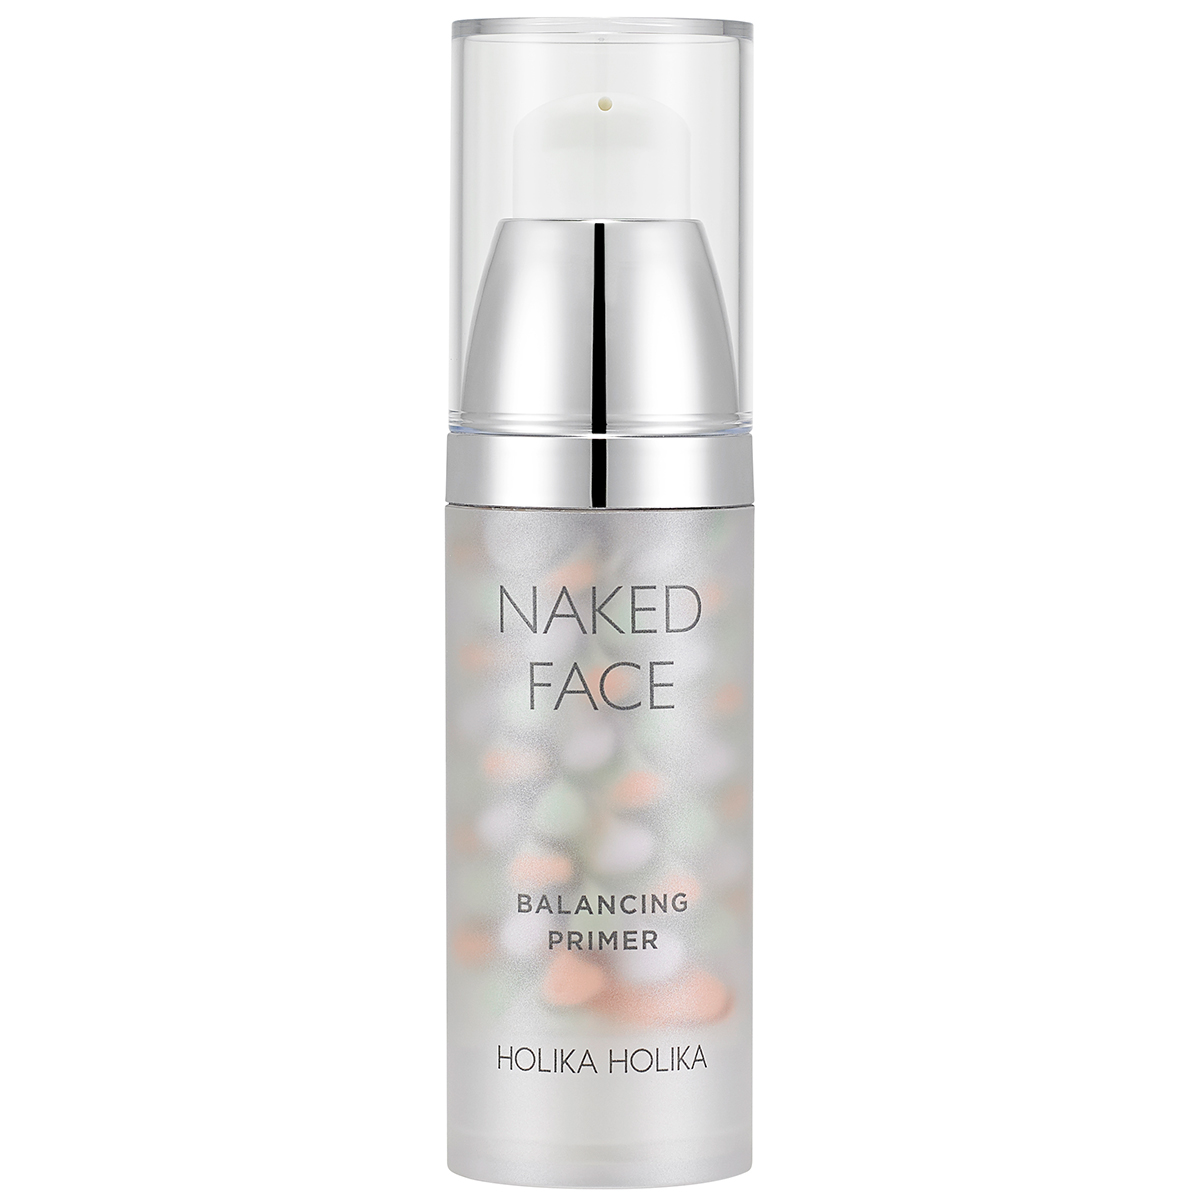 Naked Face Balancing Primer,  35 g Holika Holika K-Beauty: Primer